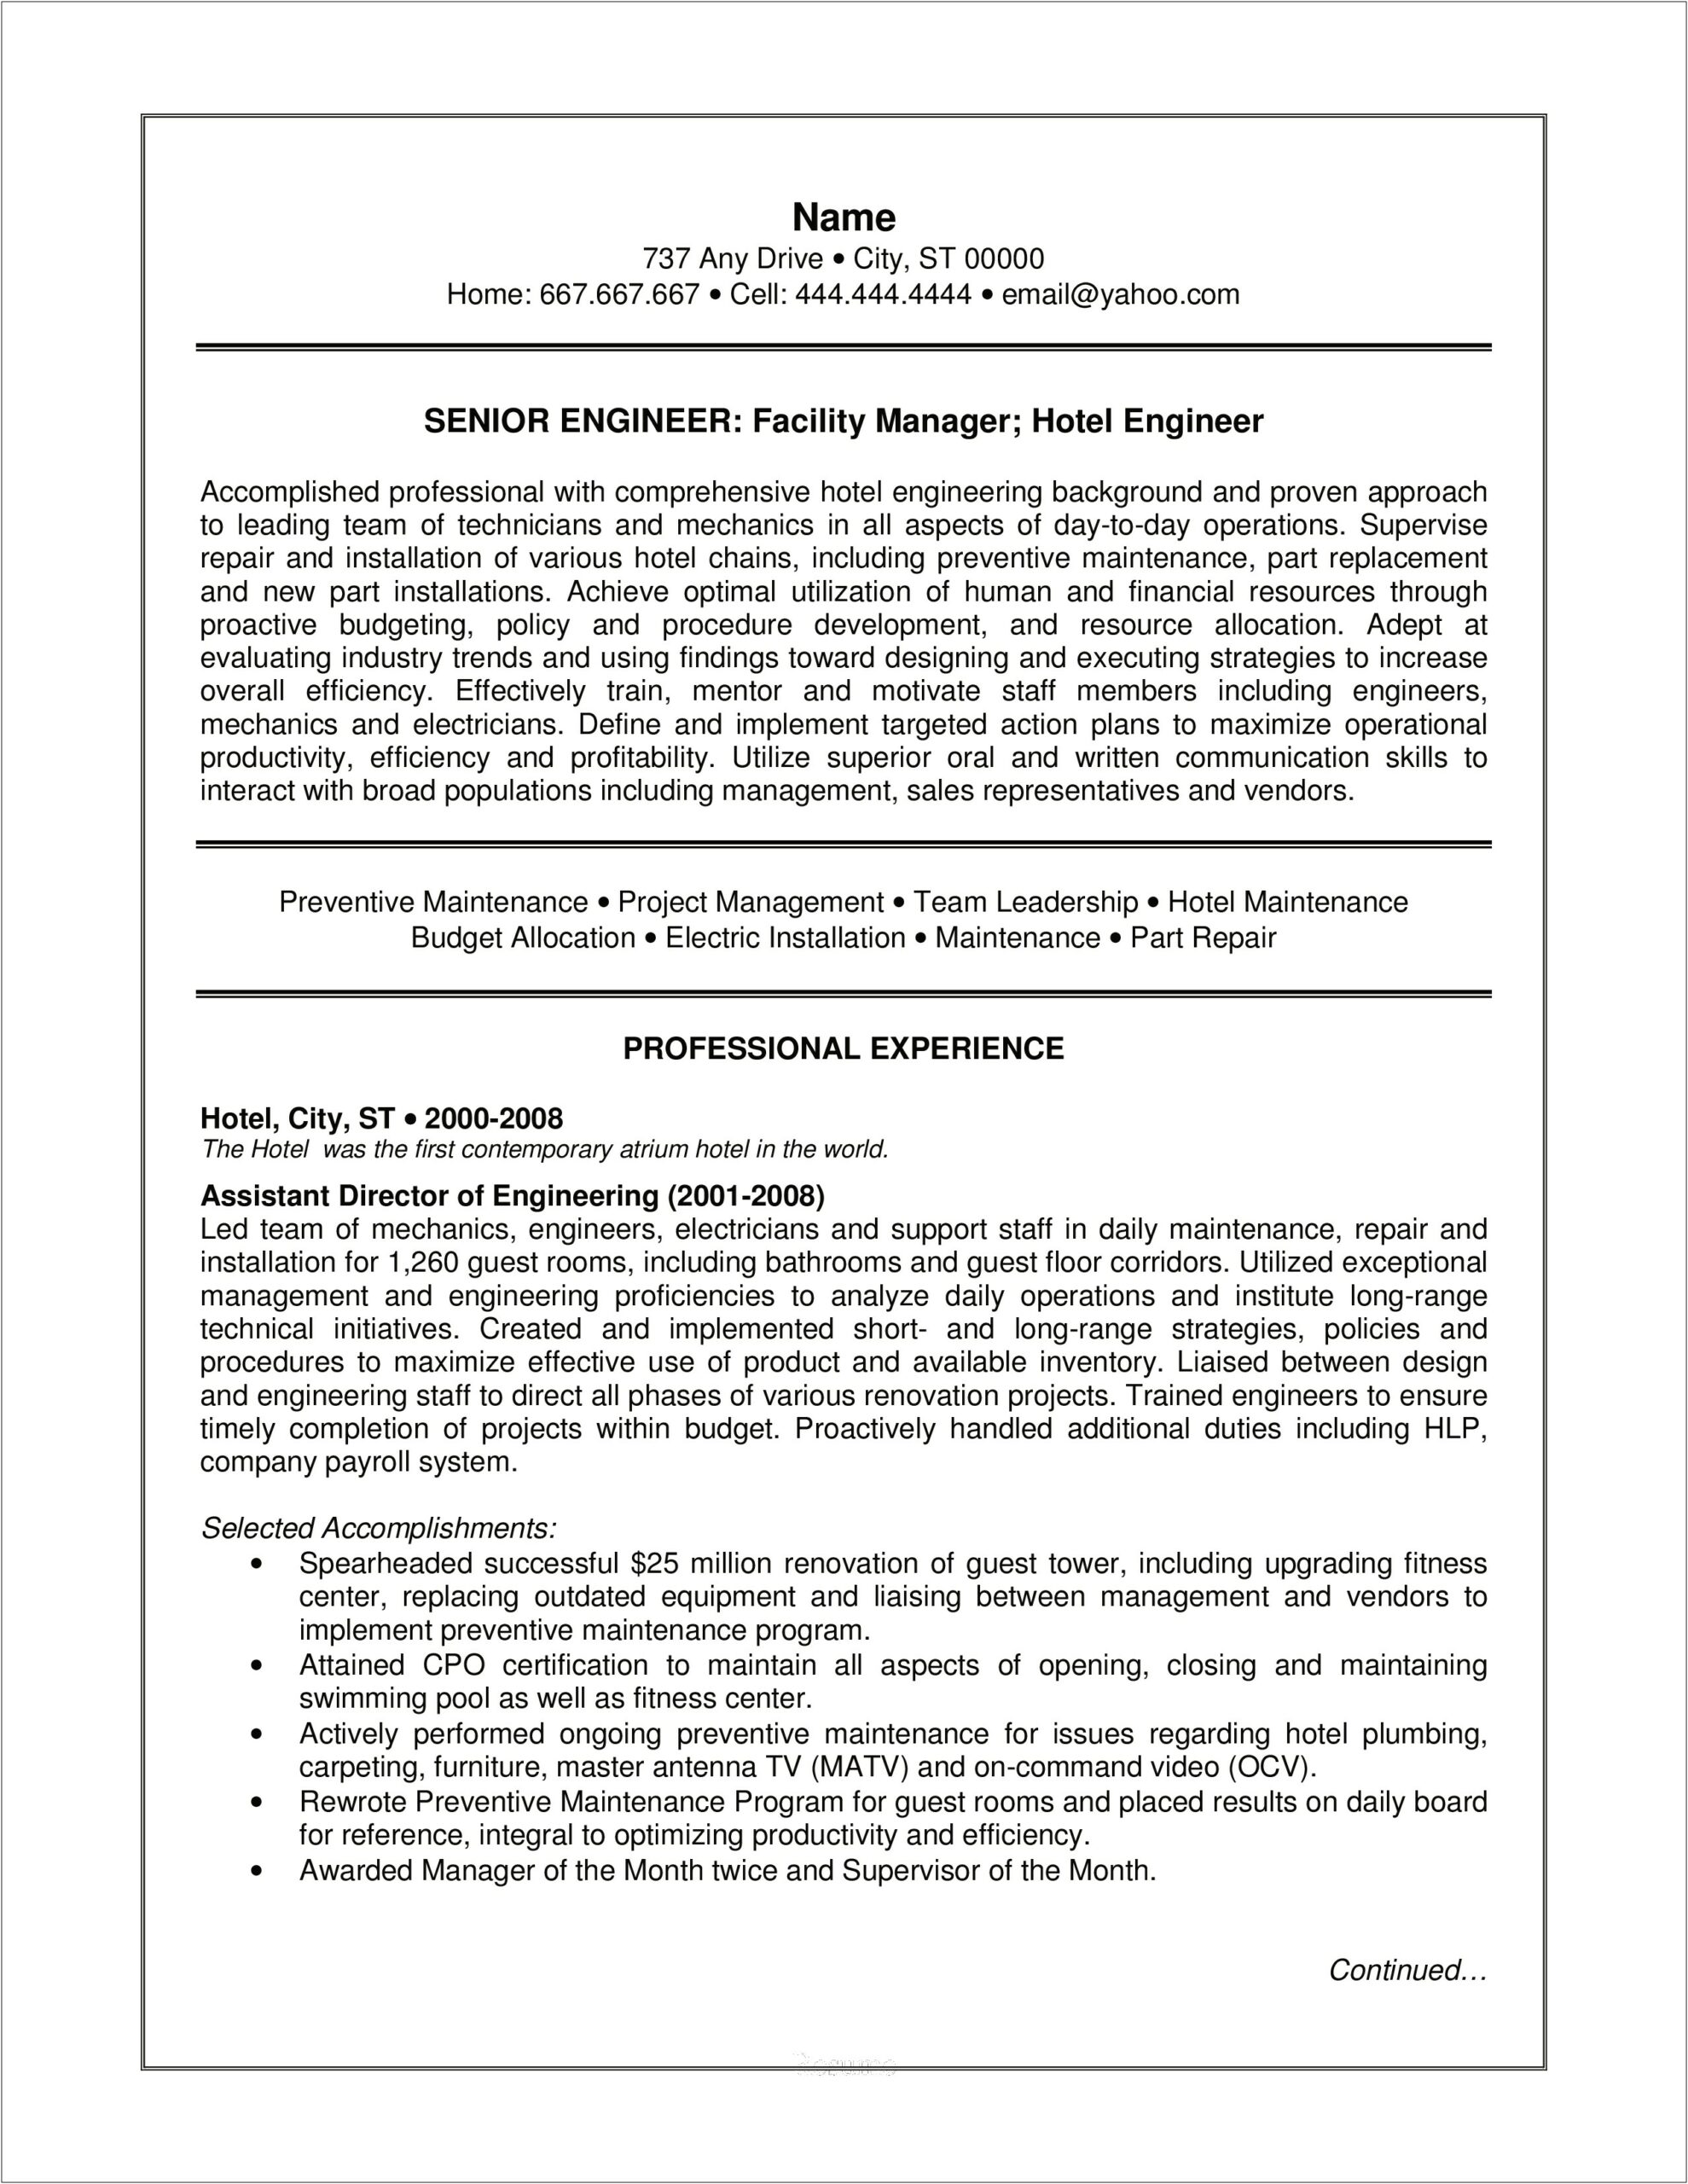 Sample Resume For Hotel Maintenance Engineer